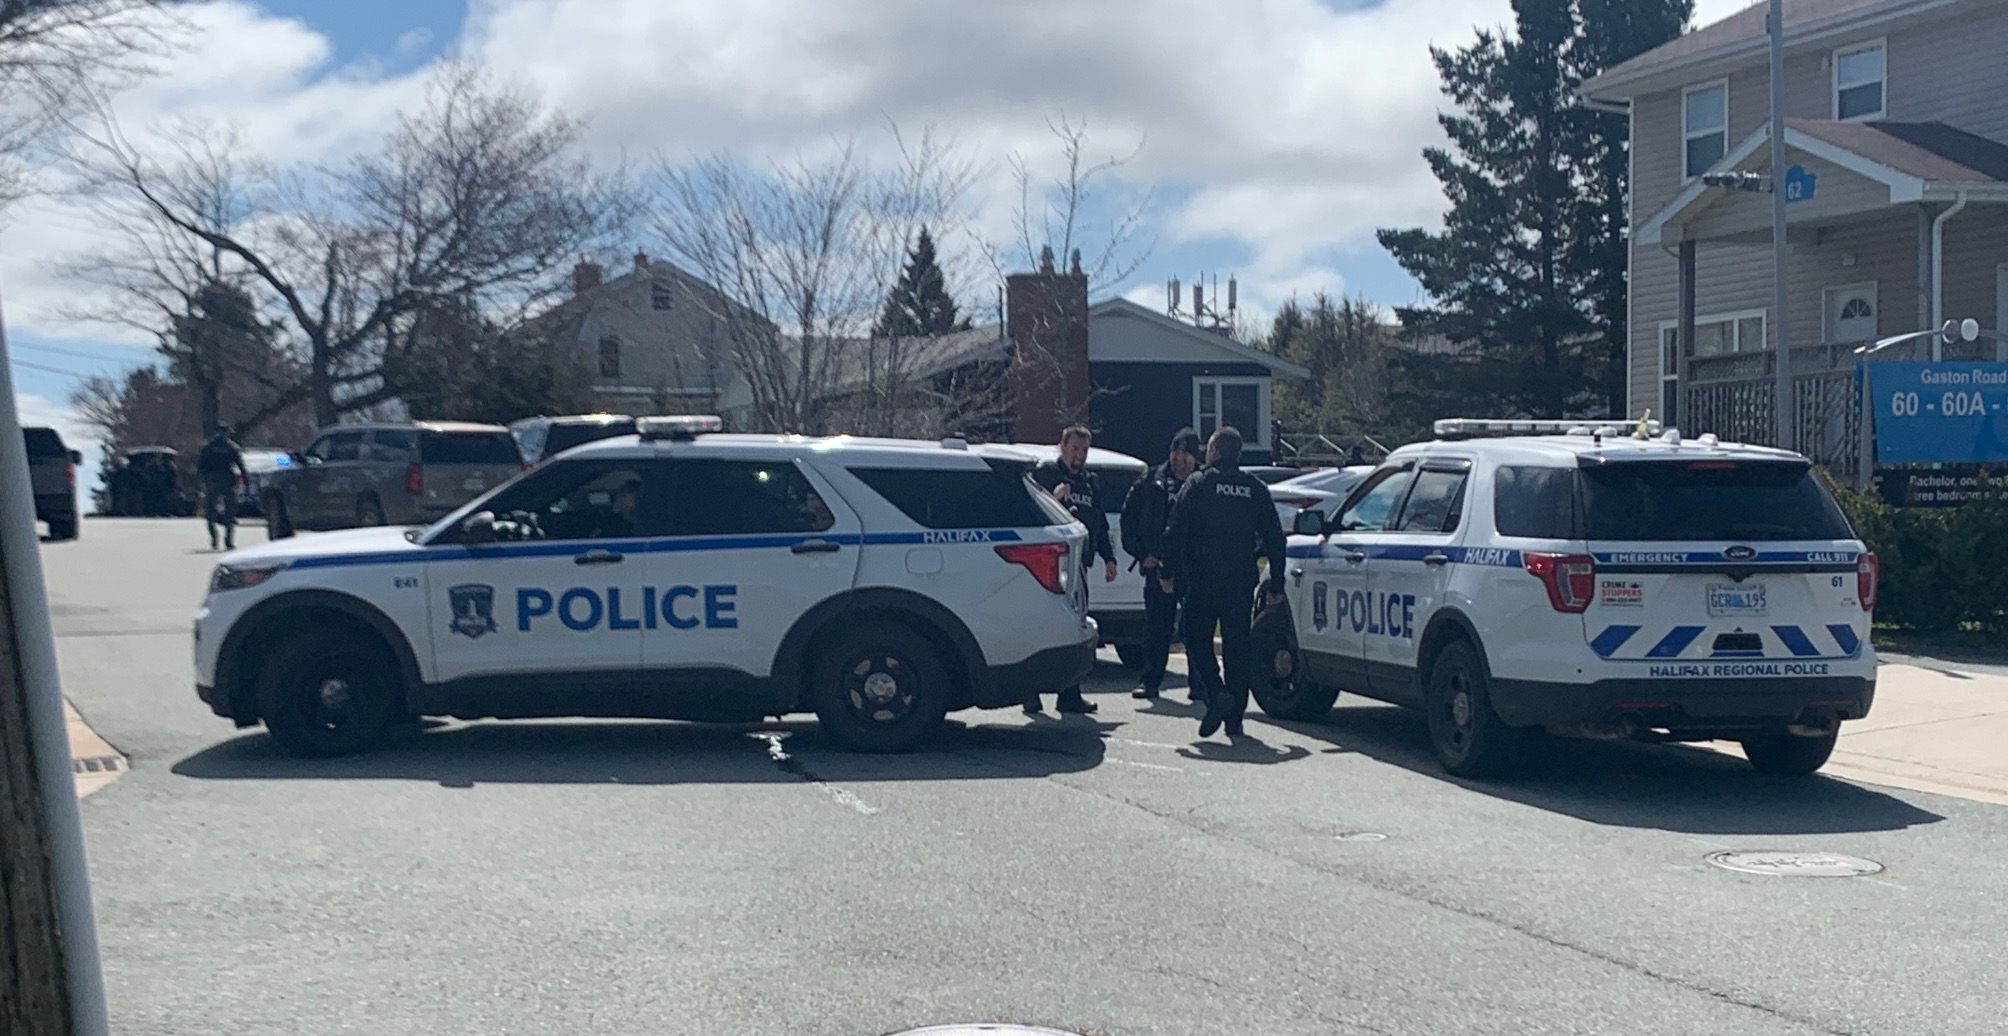 Emergency alert issued over ‘dangerous man’ with firearm in
Dartmouth